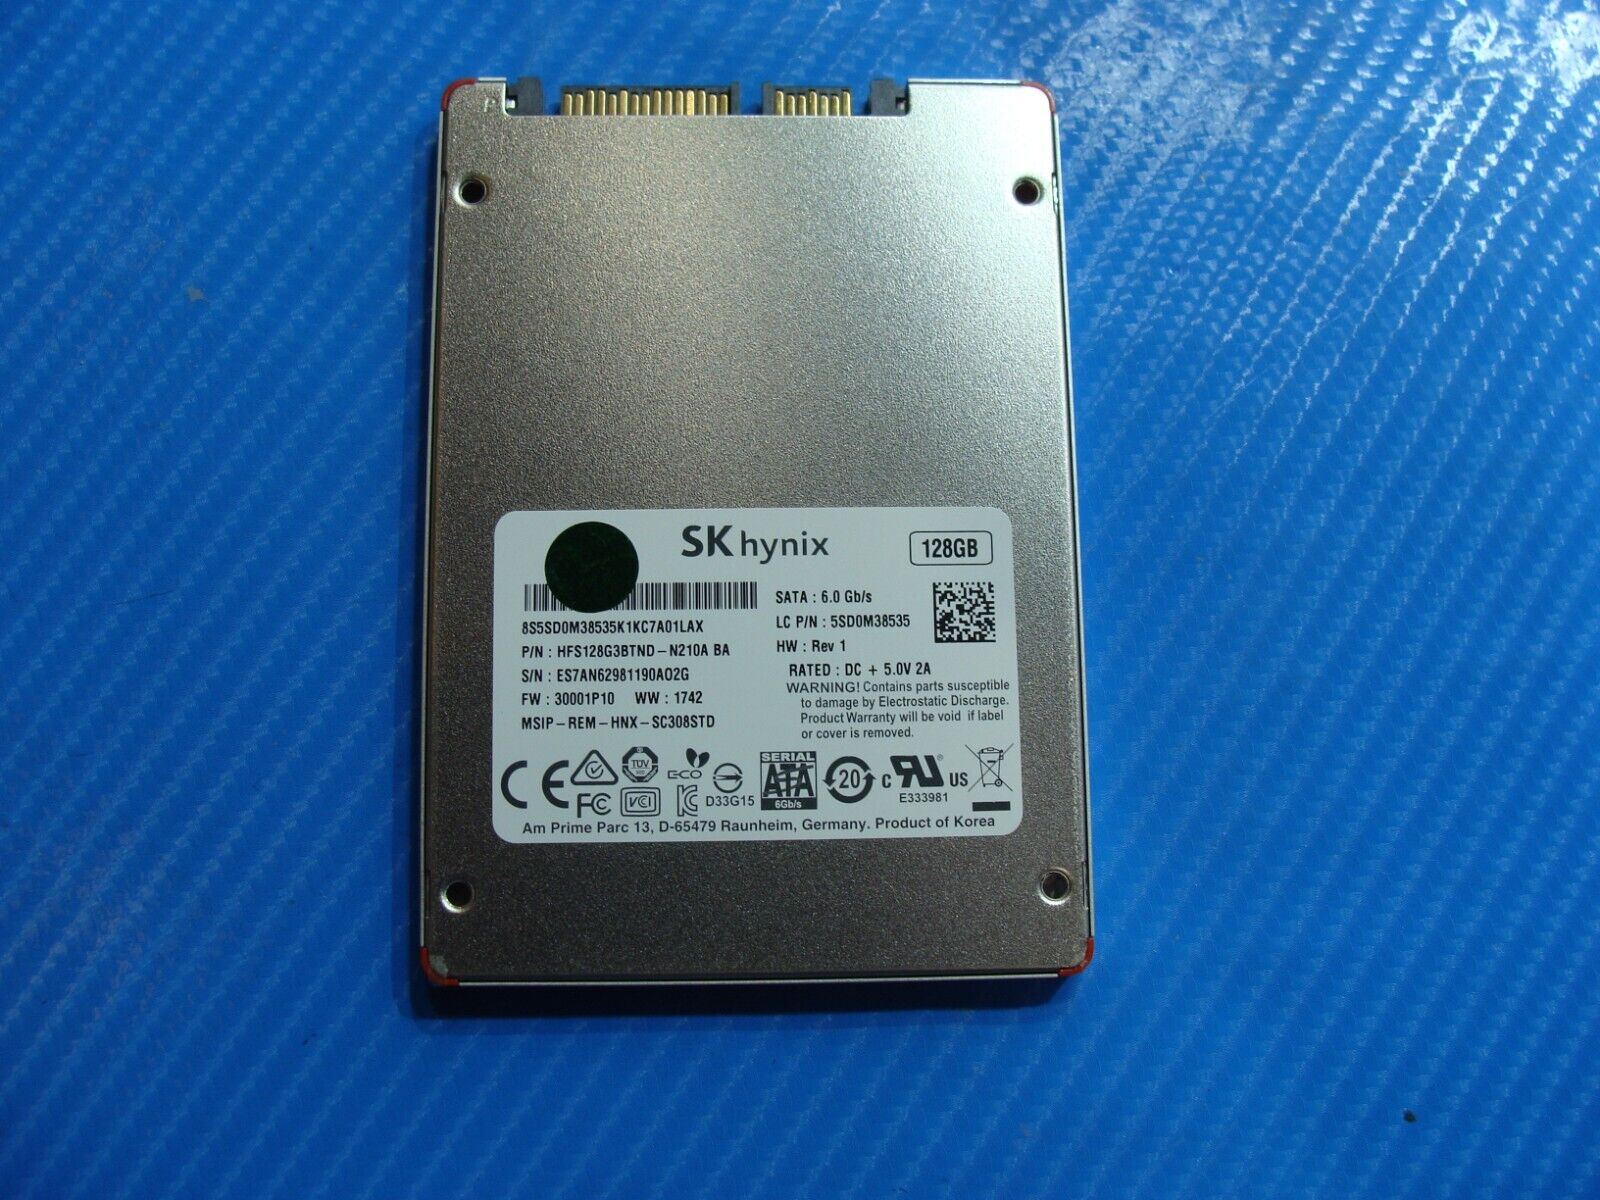 Lenovo 320-15 SK Hynix 128GB SATA 2.5